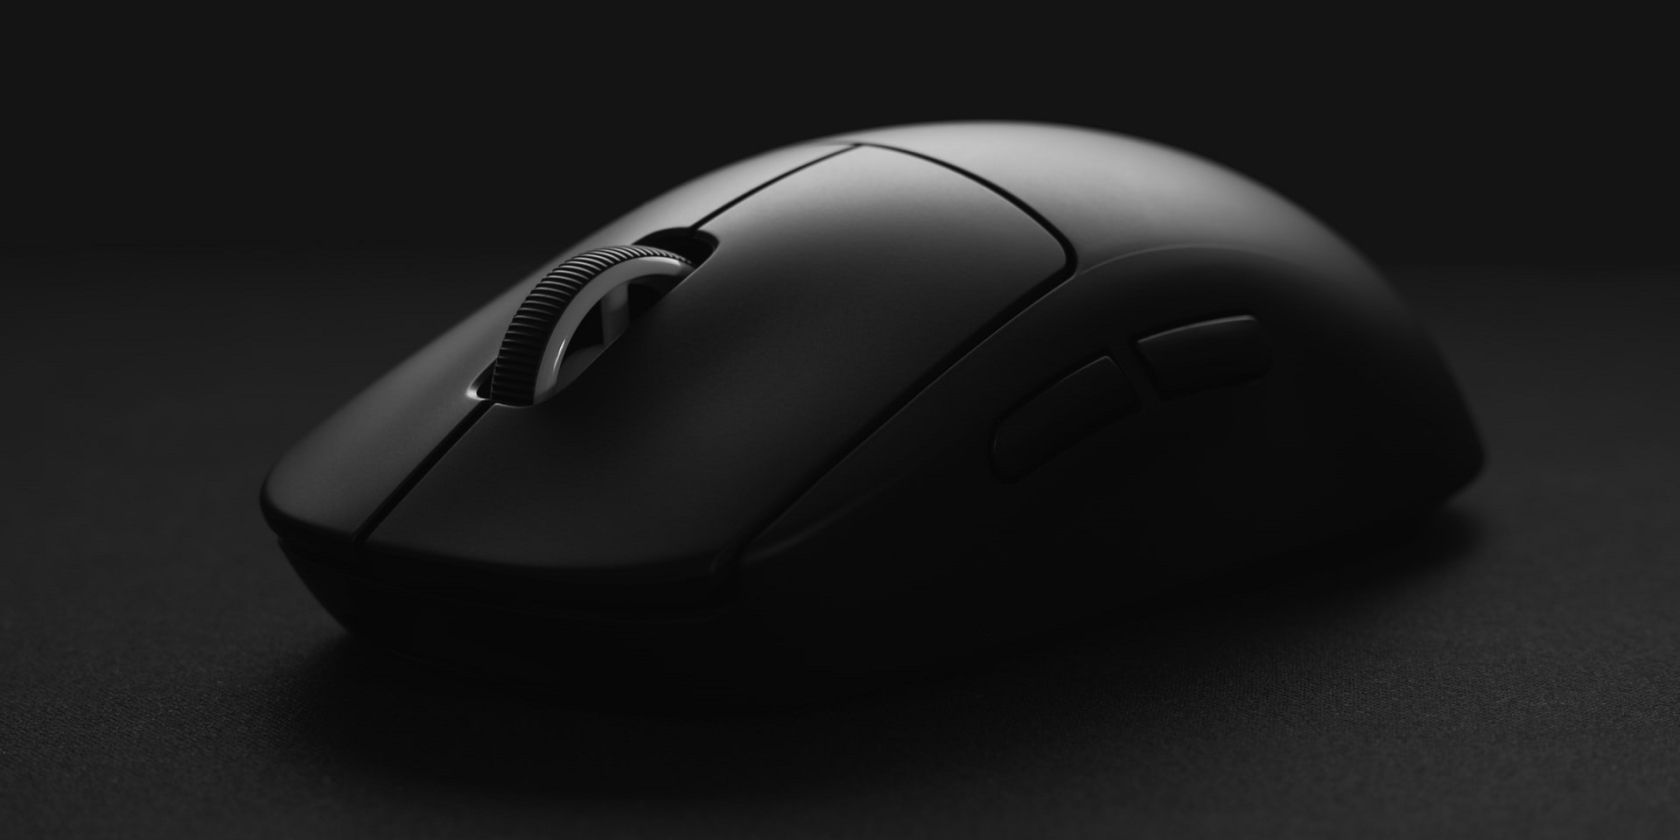 Black Cordless Mouse Unsplash.jpg